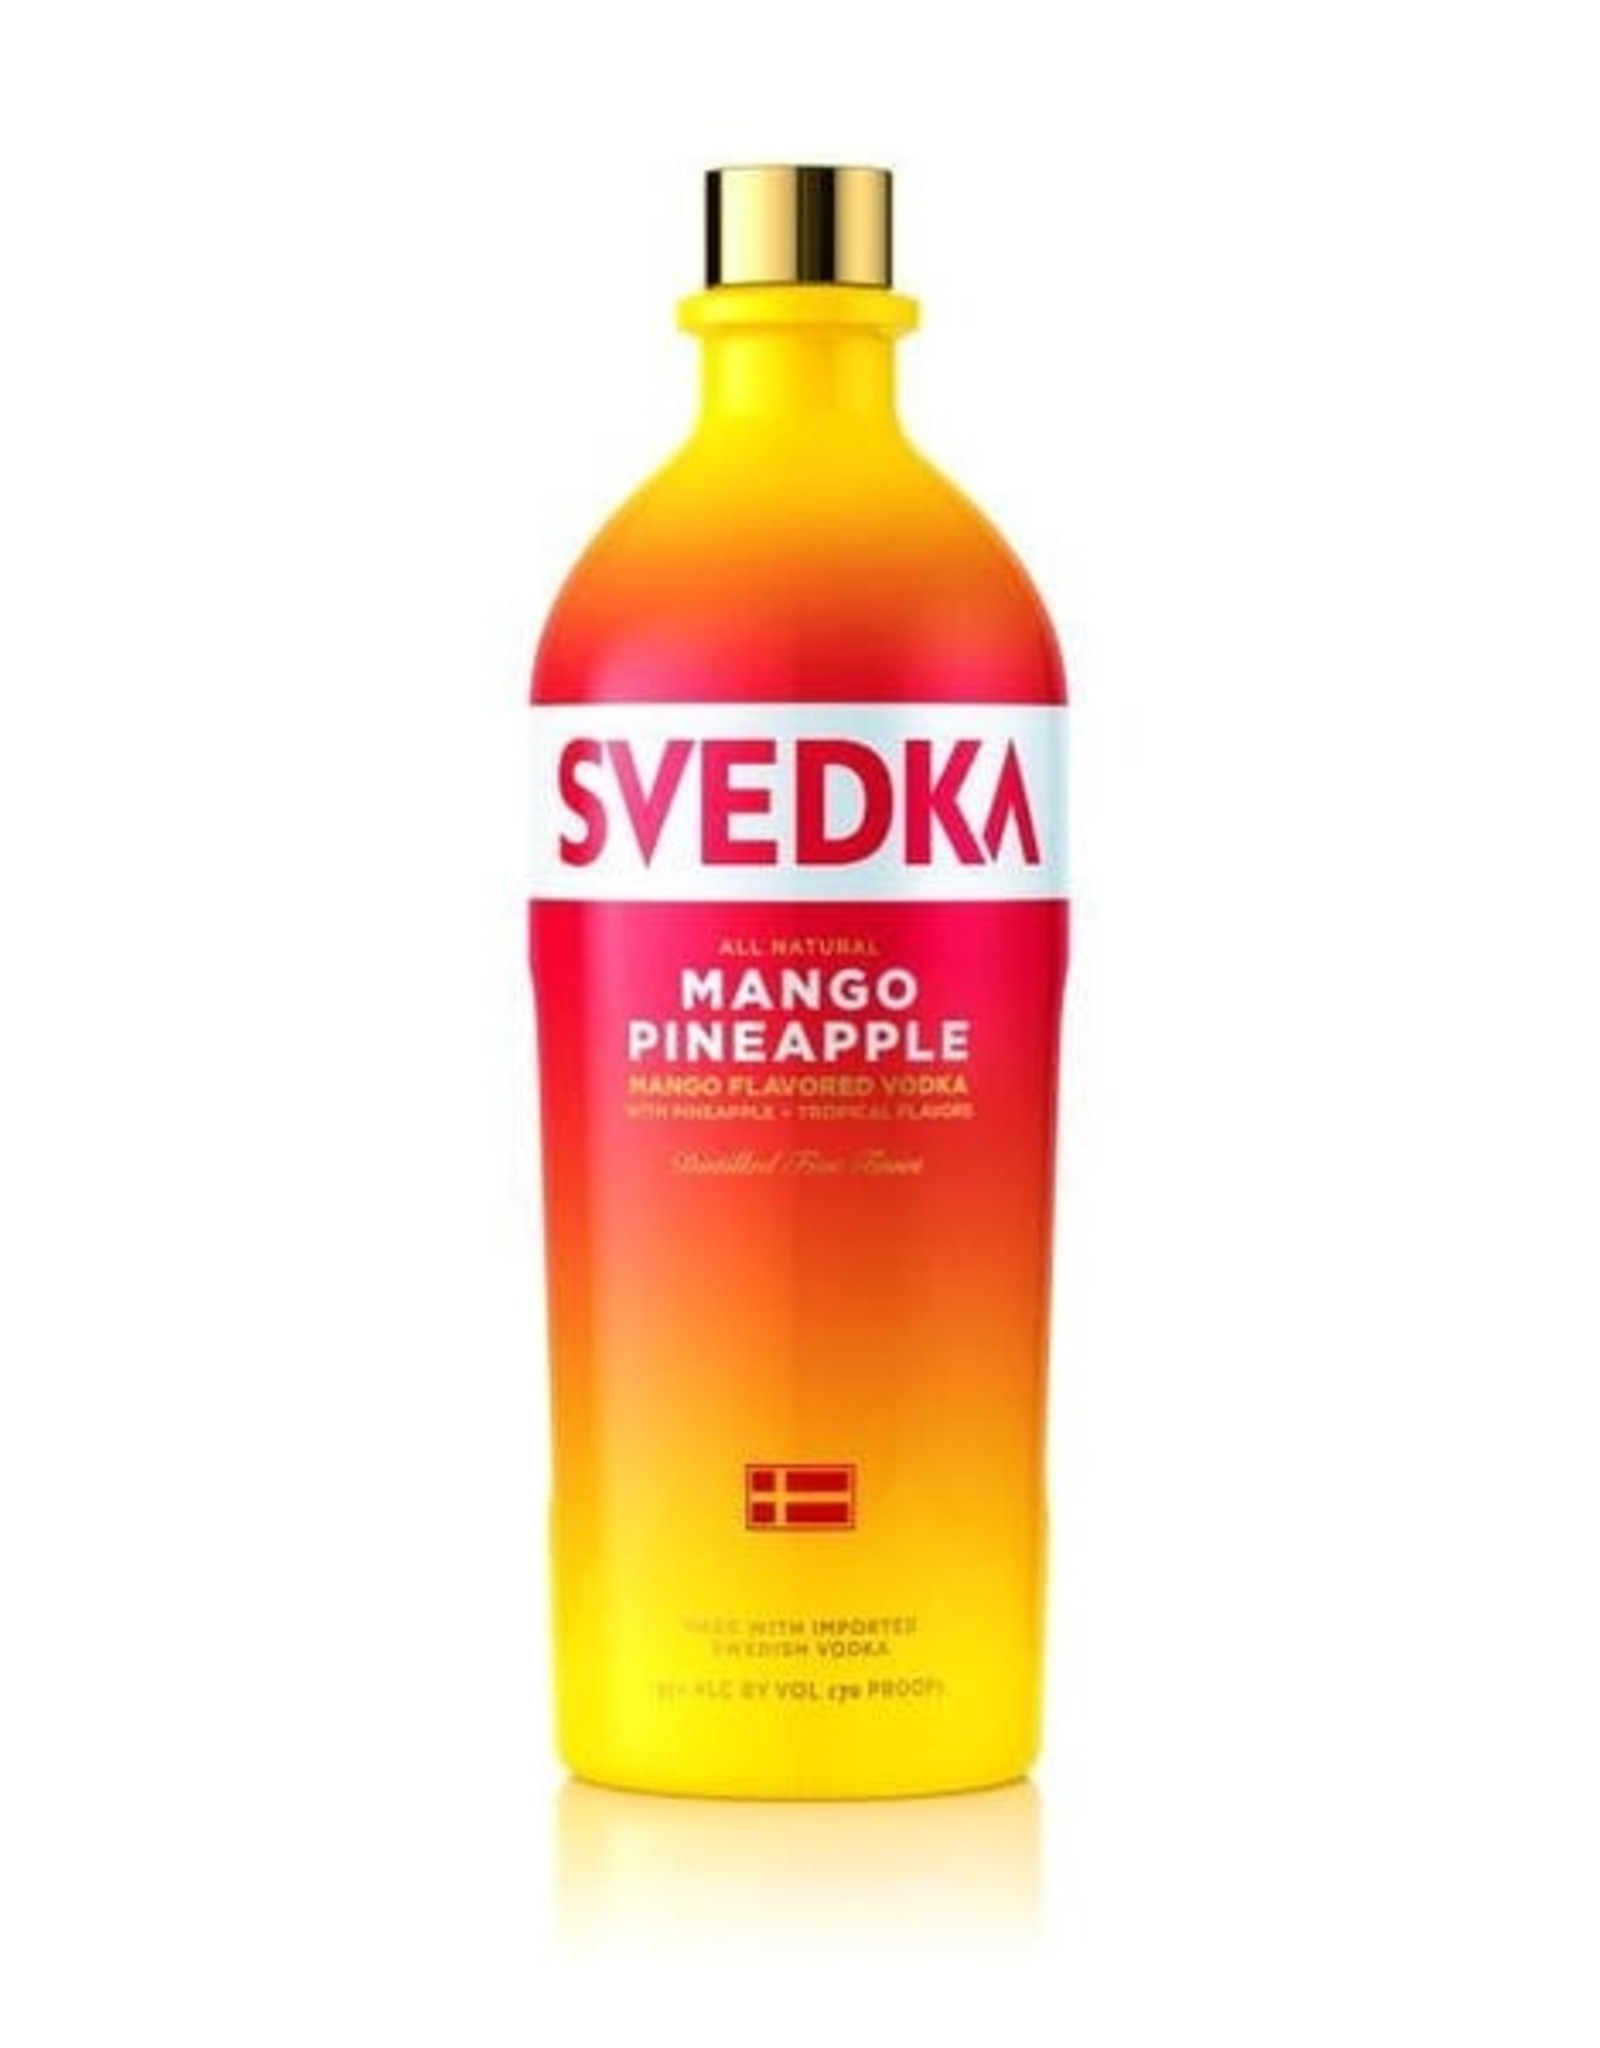 Svedka Mango Pineapple 1.75L